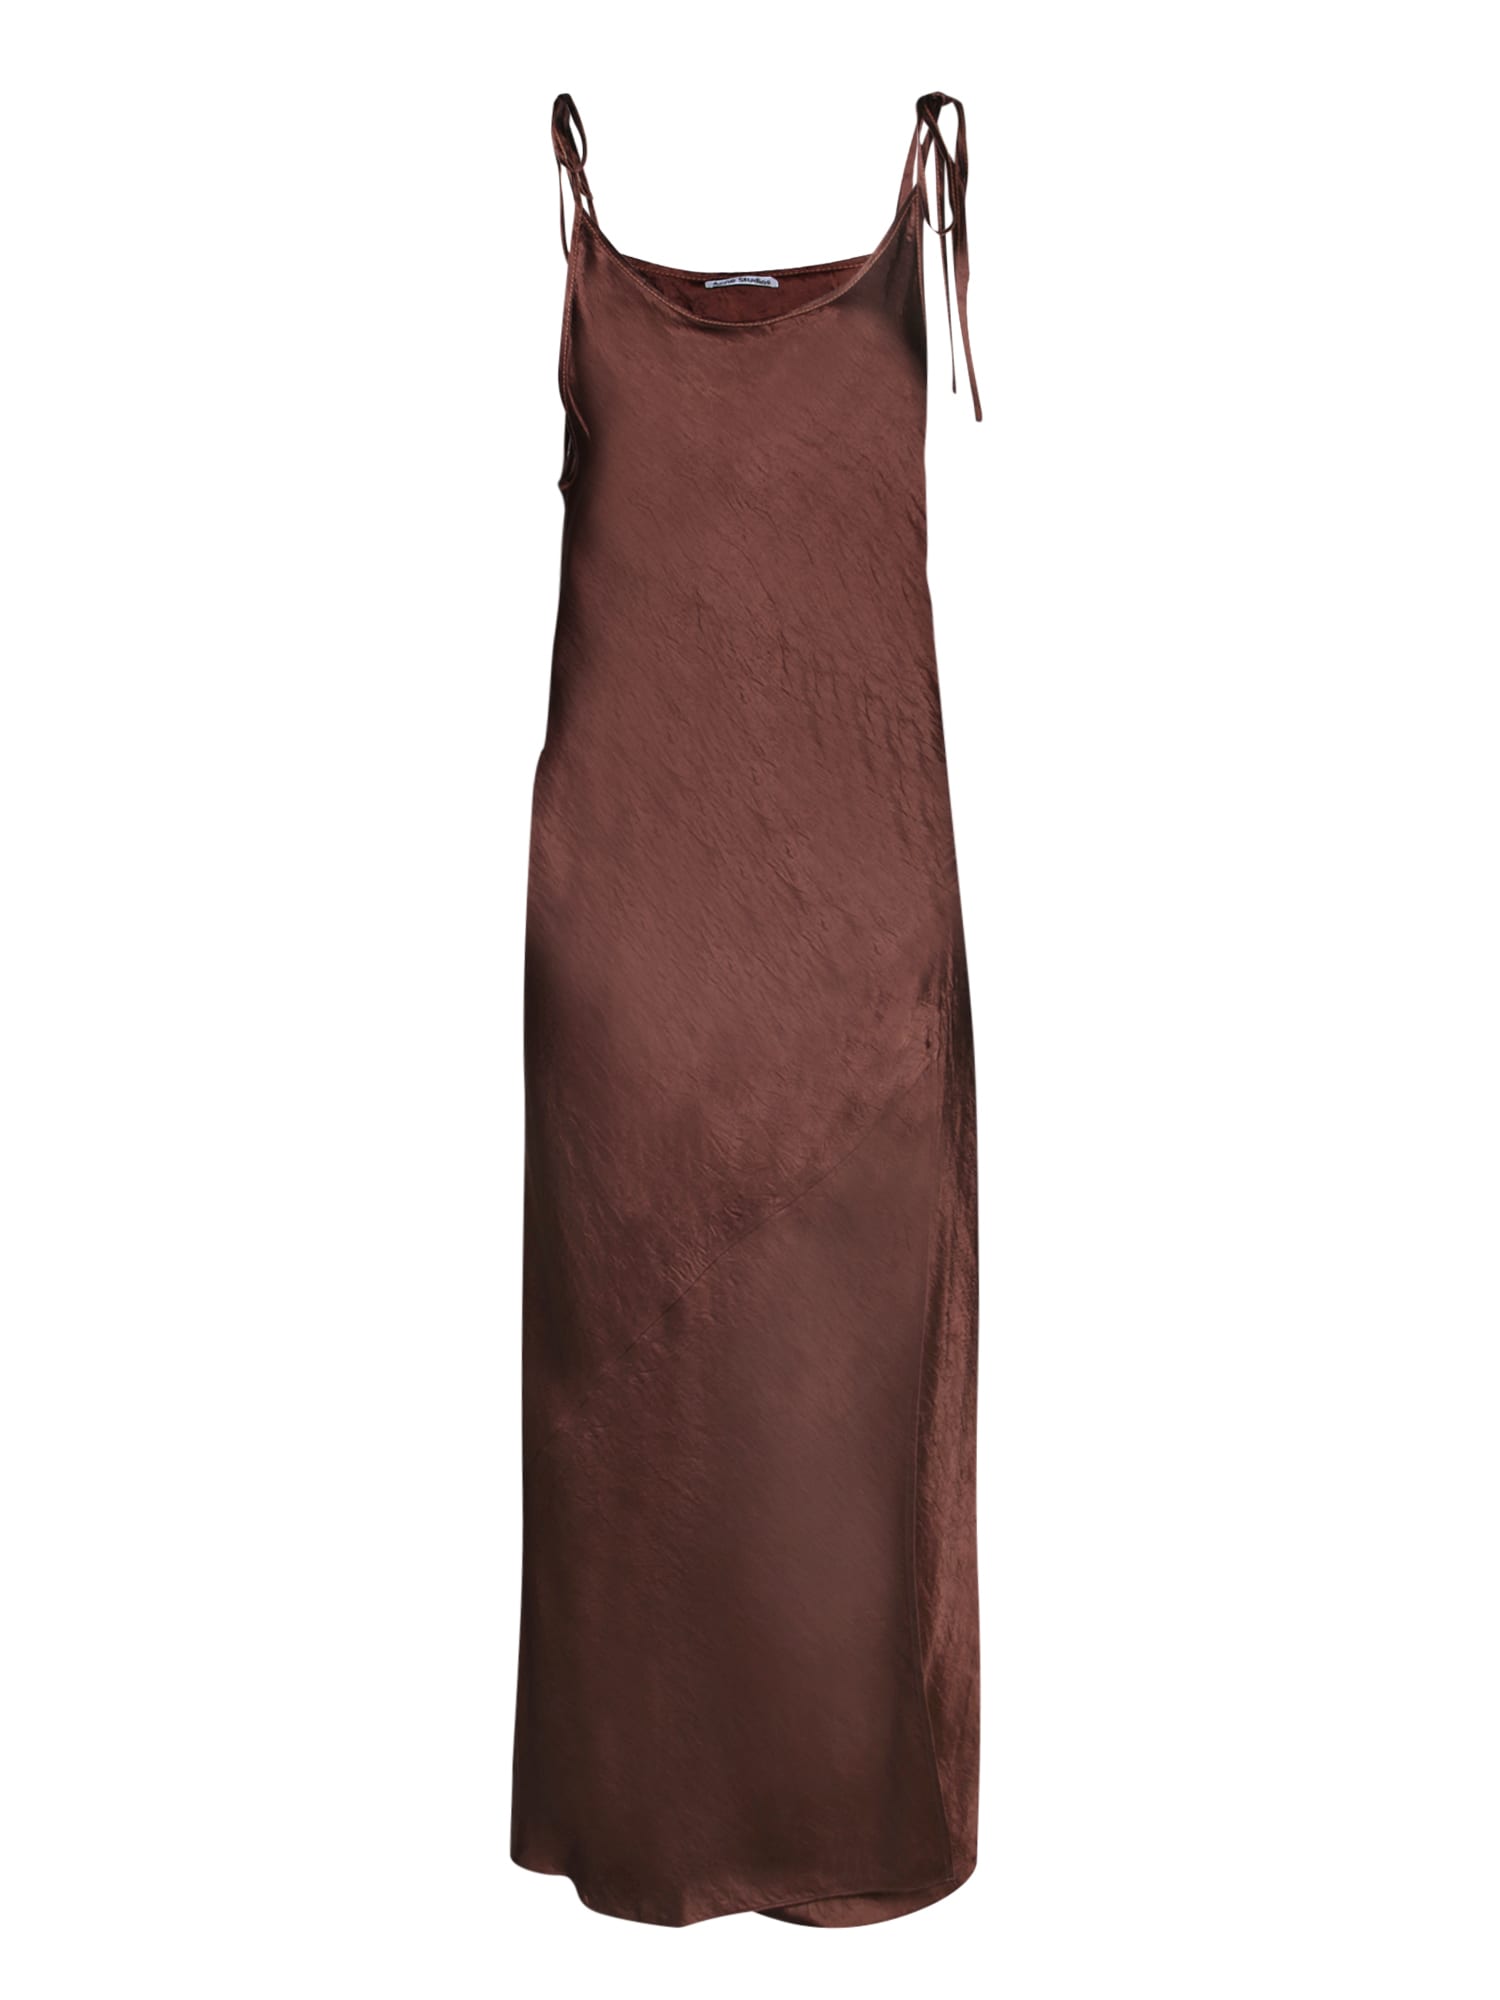 Drapared Brown Dress